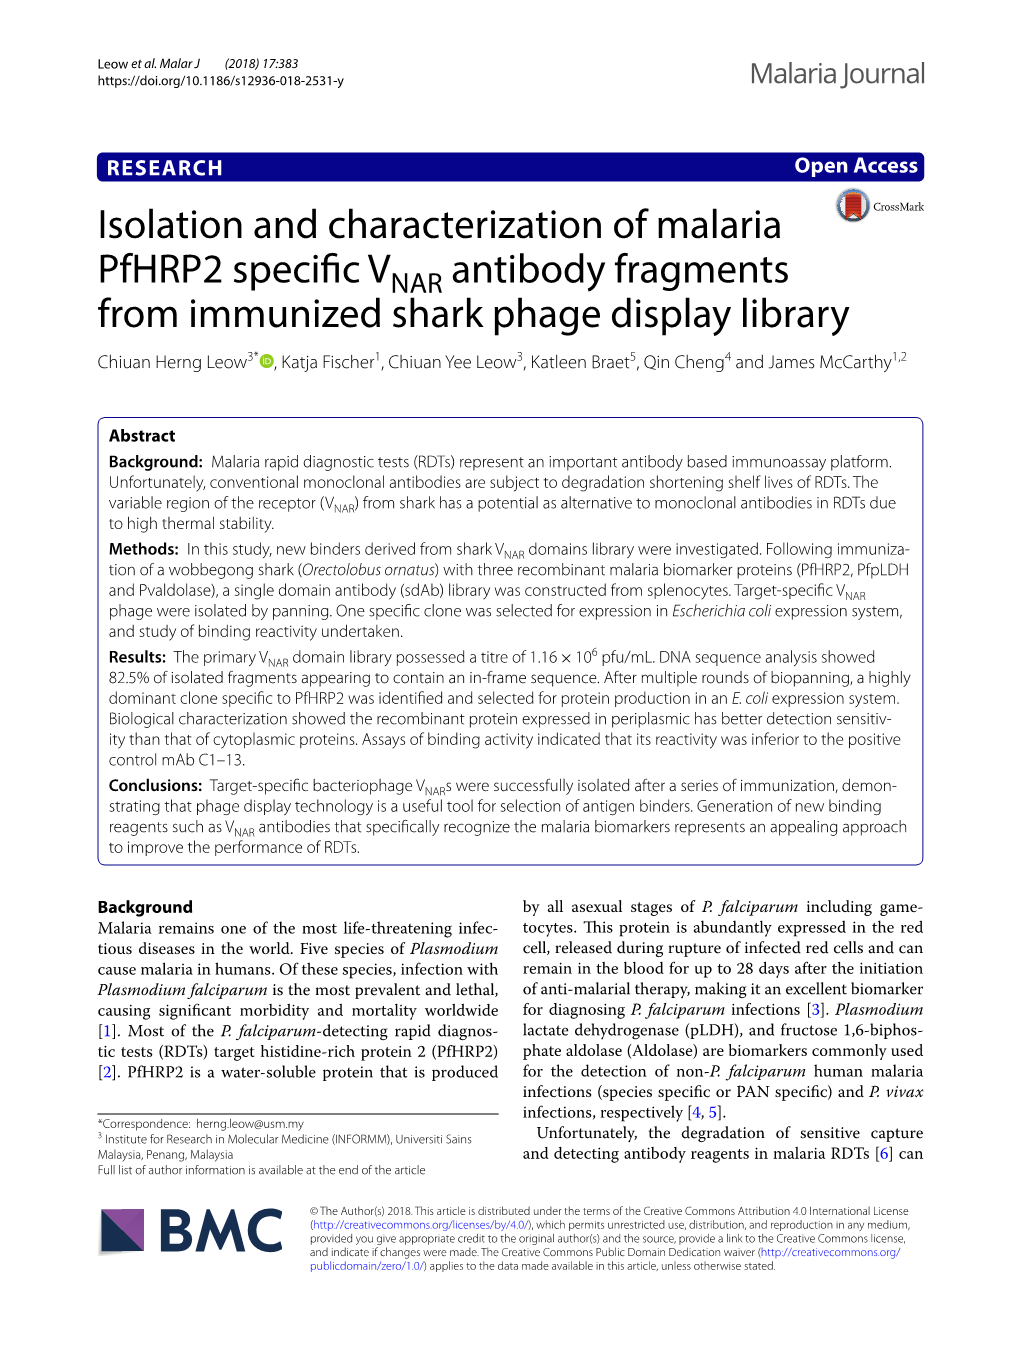 Isolation and Characterization of Malaria Pfhrp2